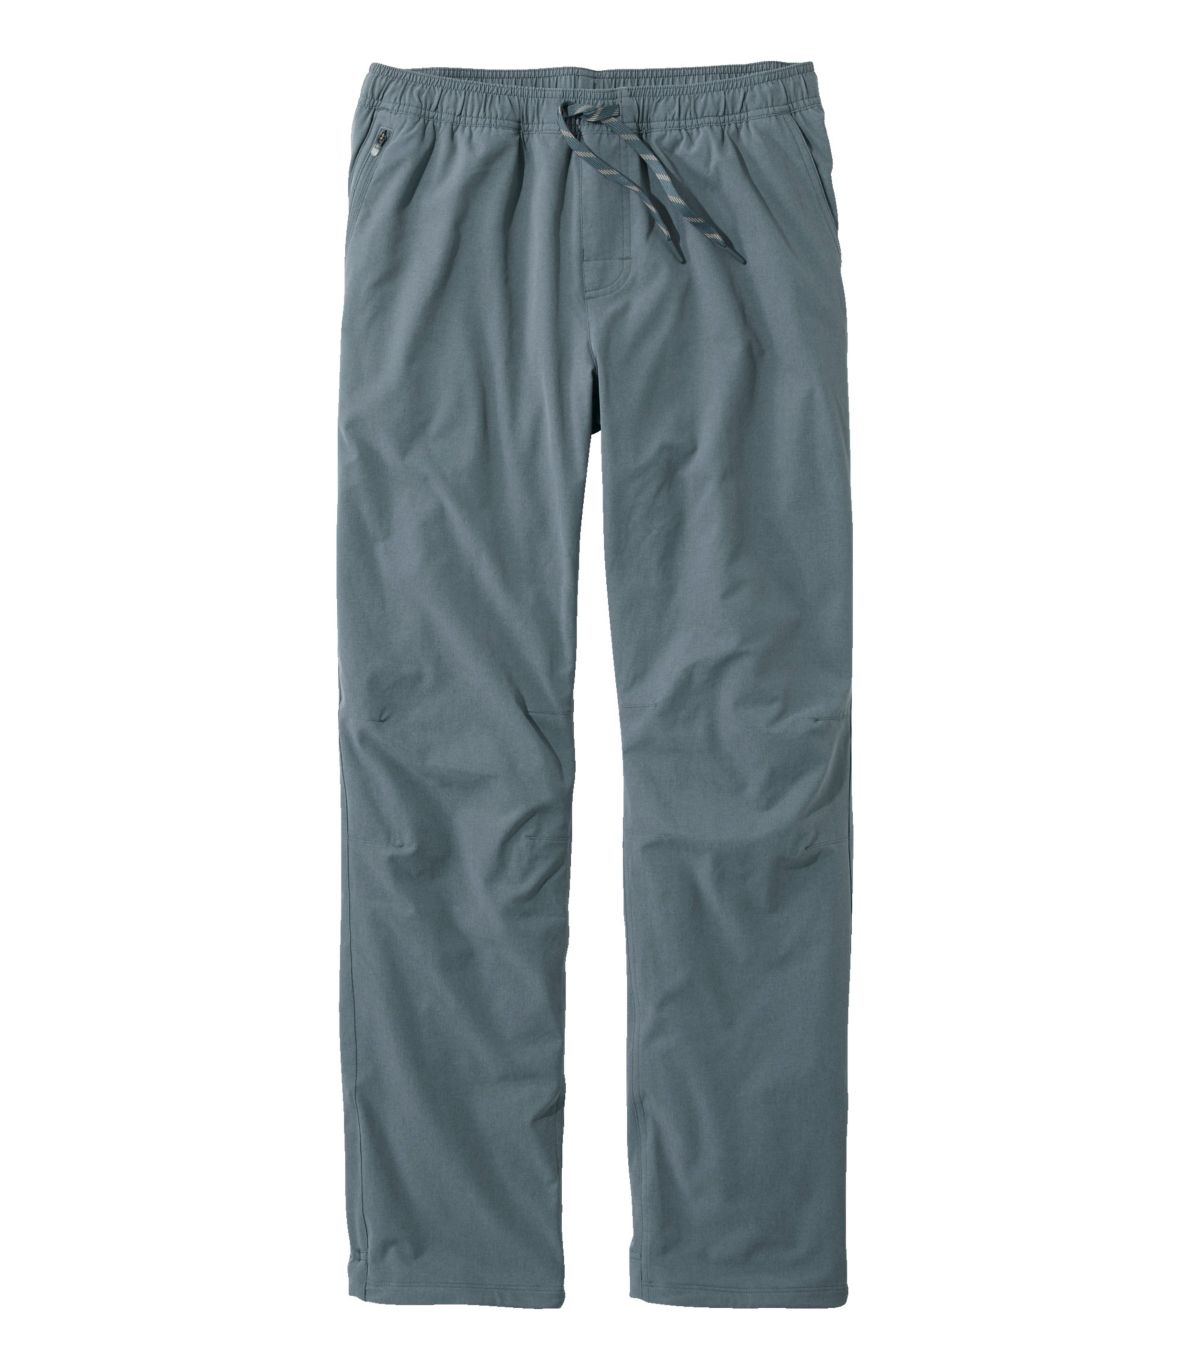 Men's L.L.Bean Multisport Pants, Lined